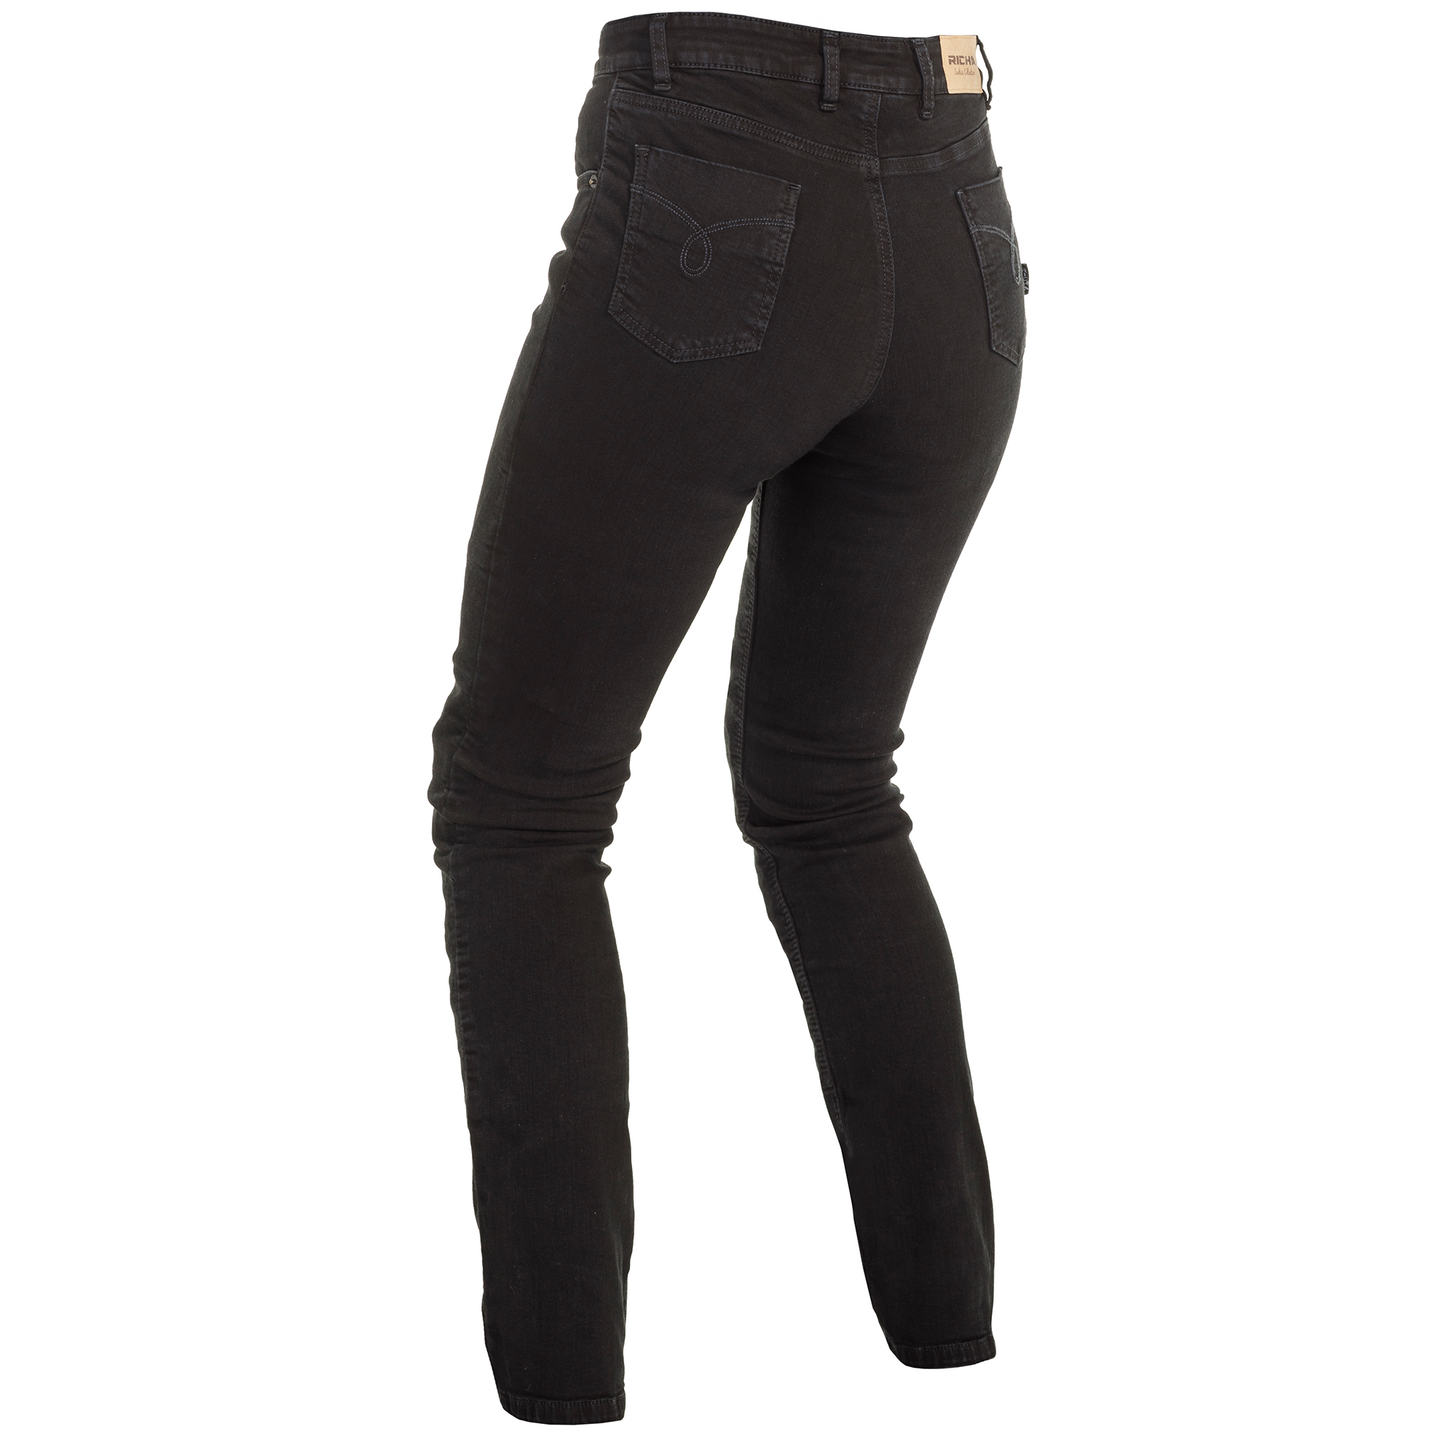 Richa Nora Slim Fit Jeans - Black